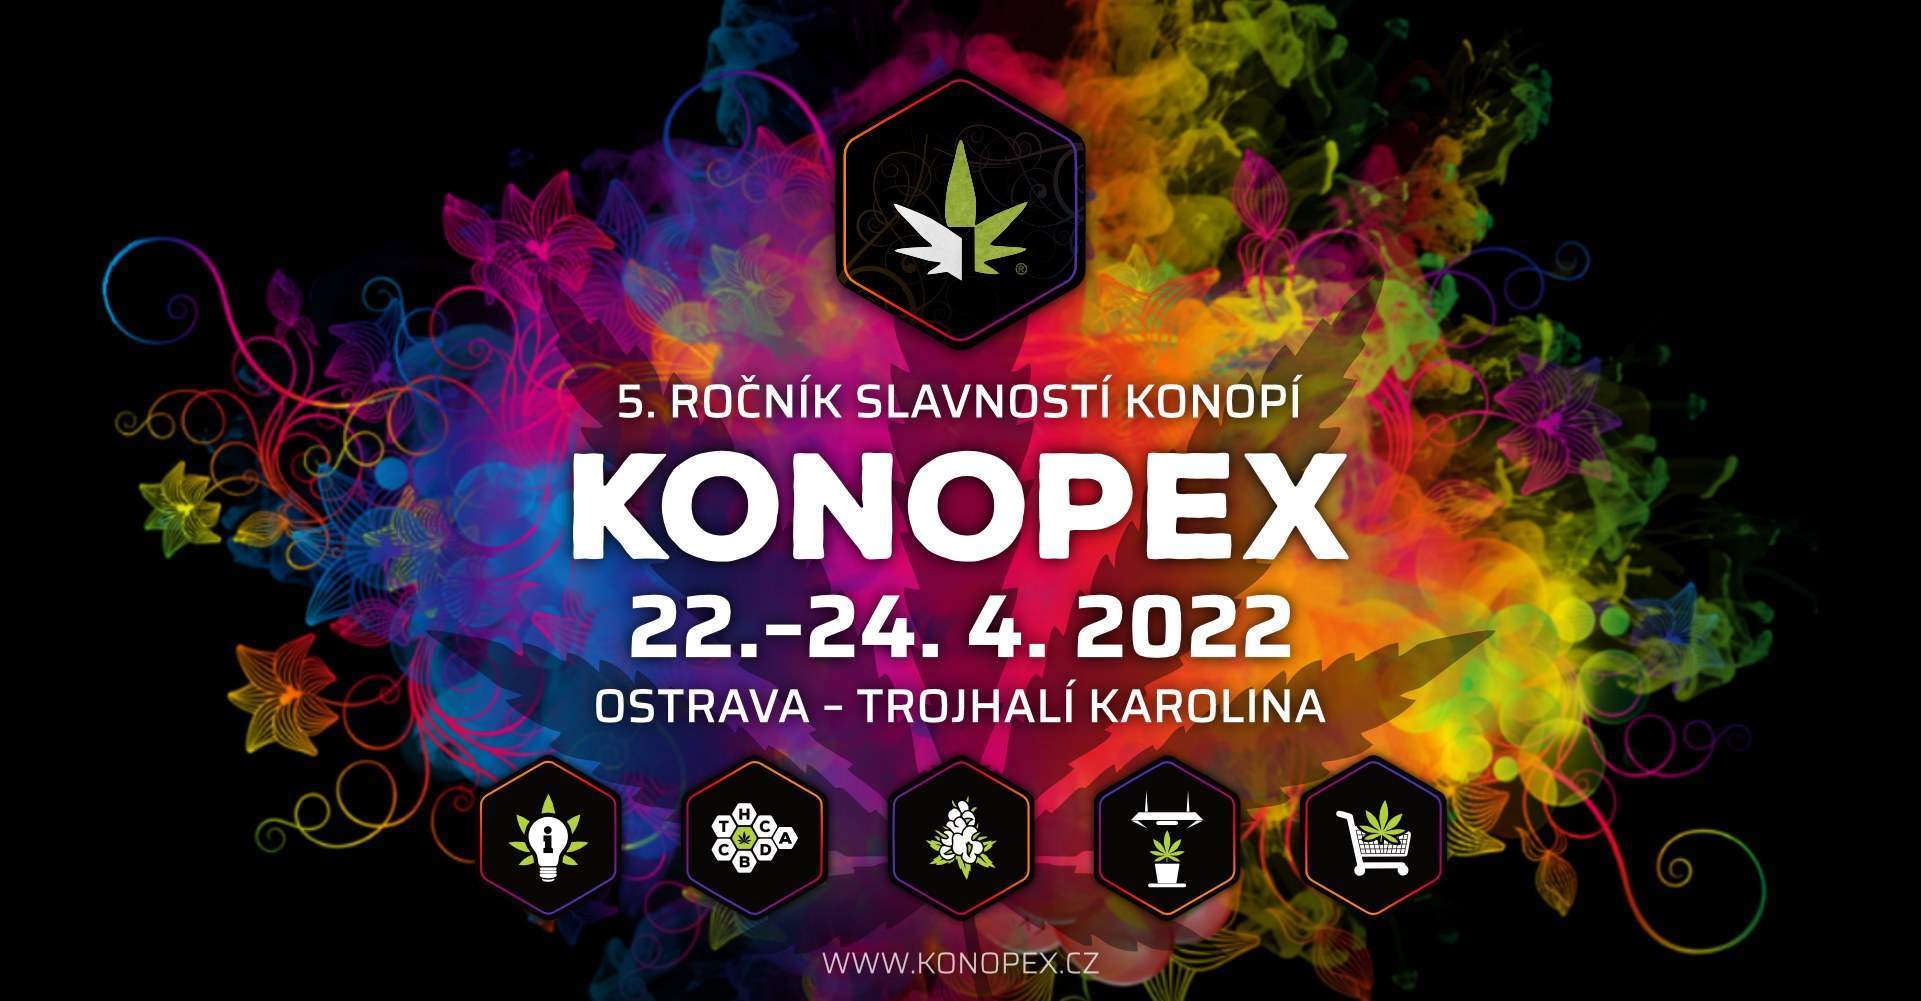 Featured image for “Nukaseeds míří na Konopex v Ostravě 2022”